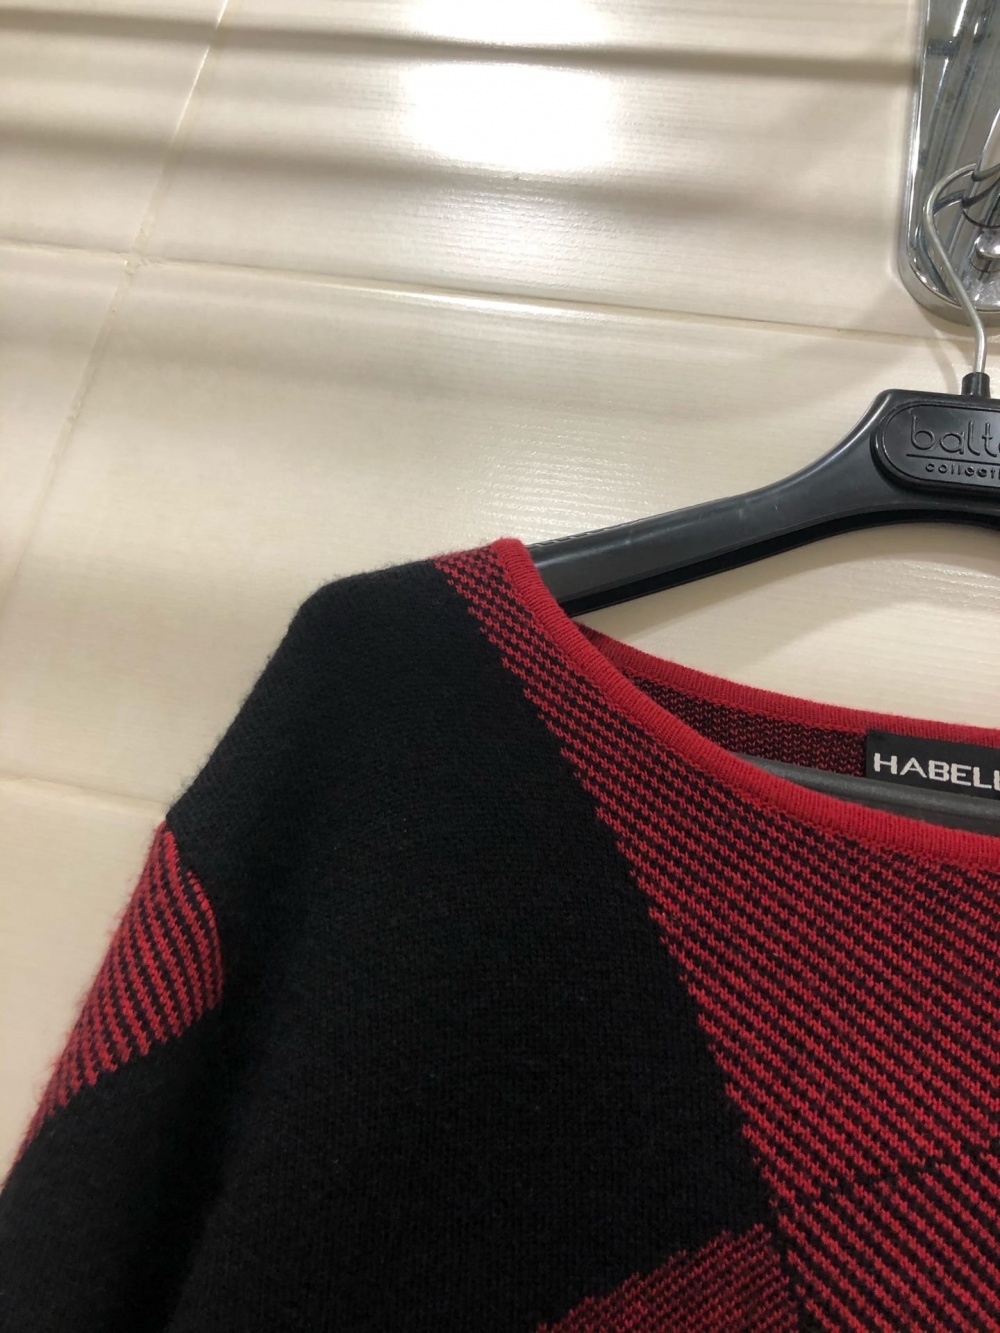 Пуловер HABELLA. Размер 46-48.